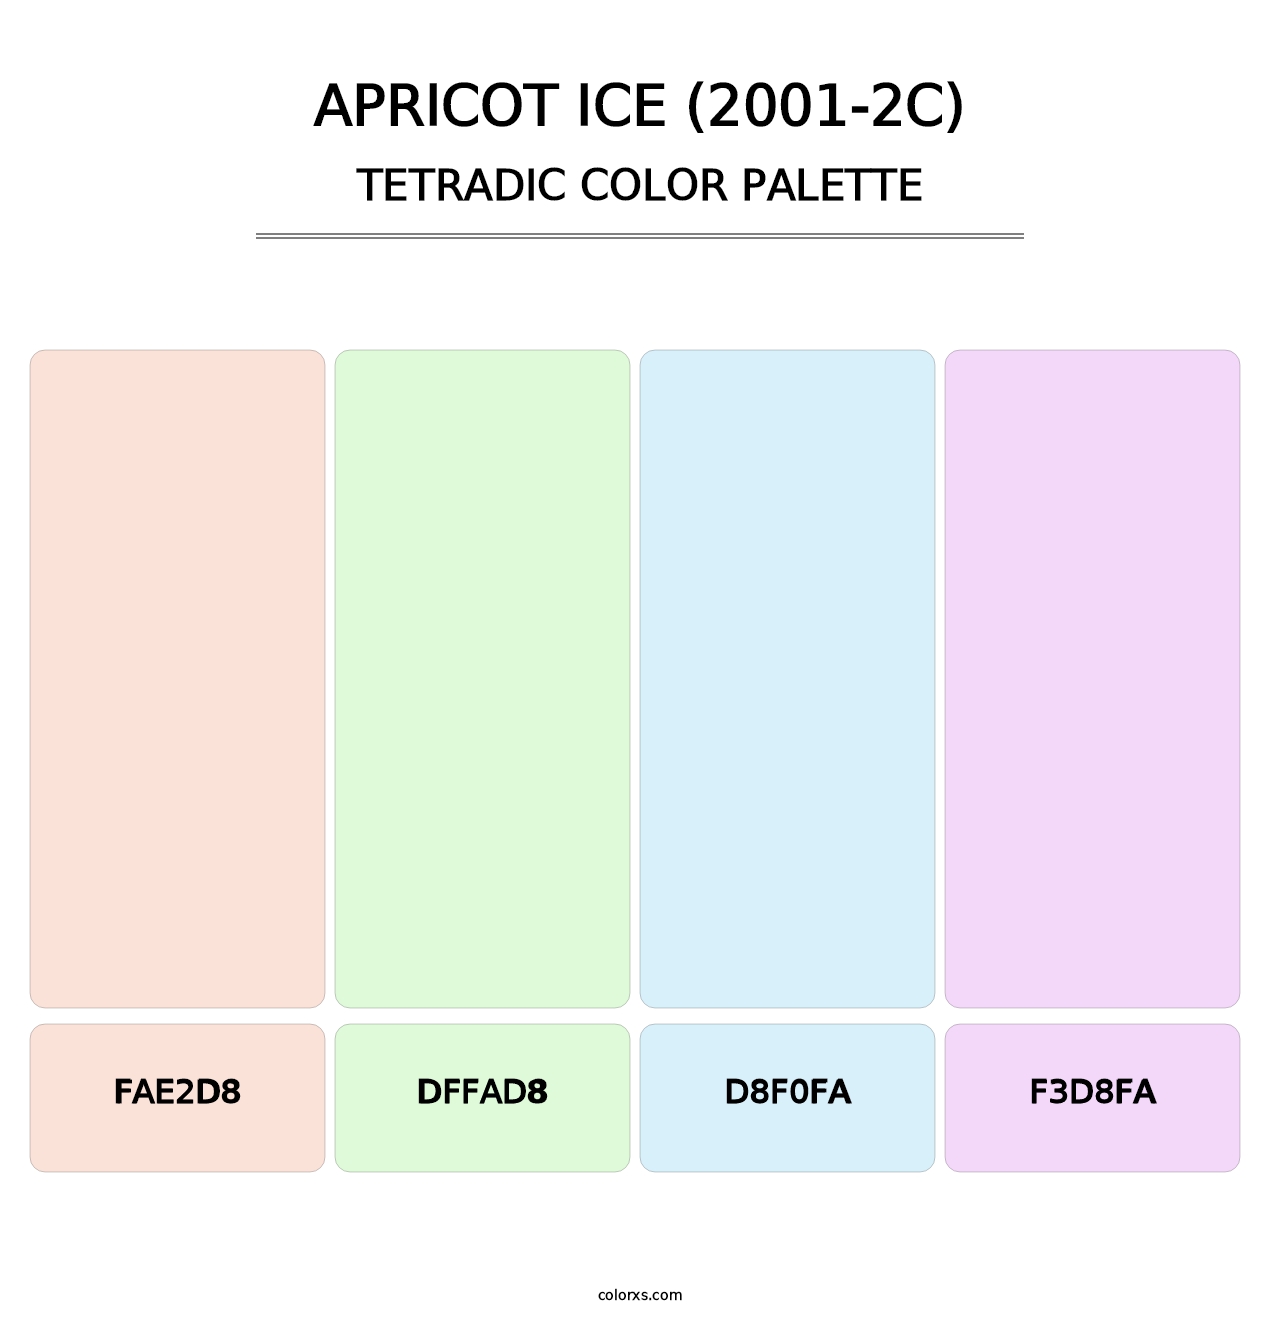 Apricot Ice (2001-2C) - Tetradic Color Palette